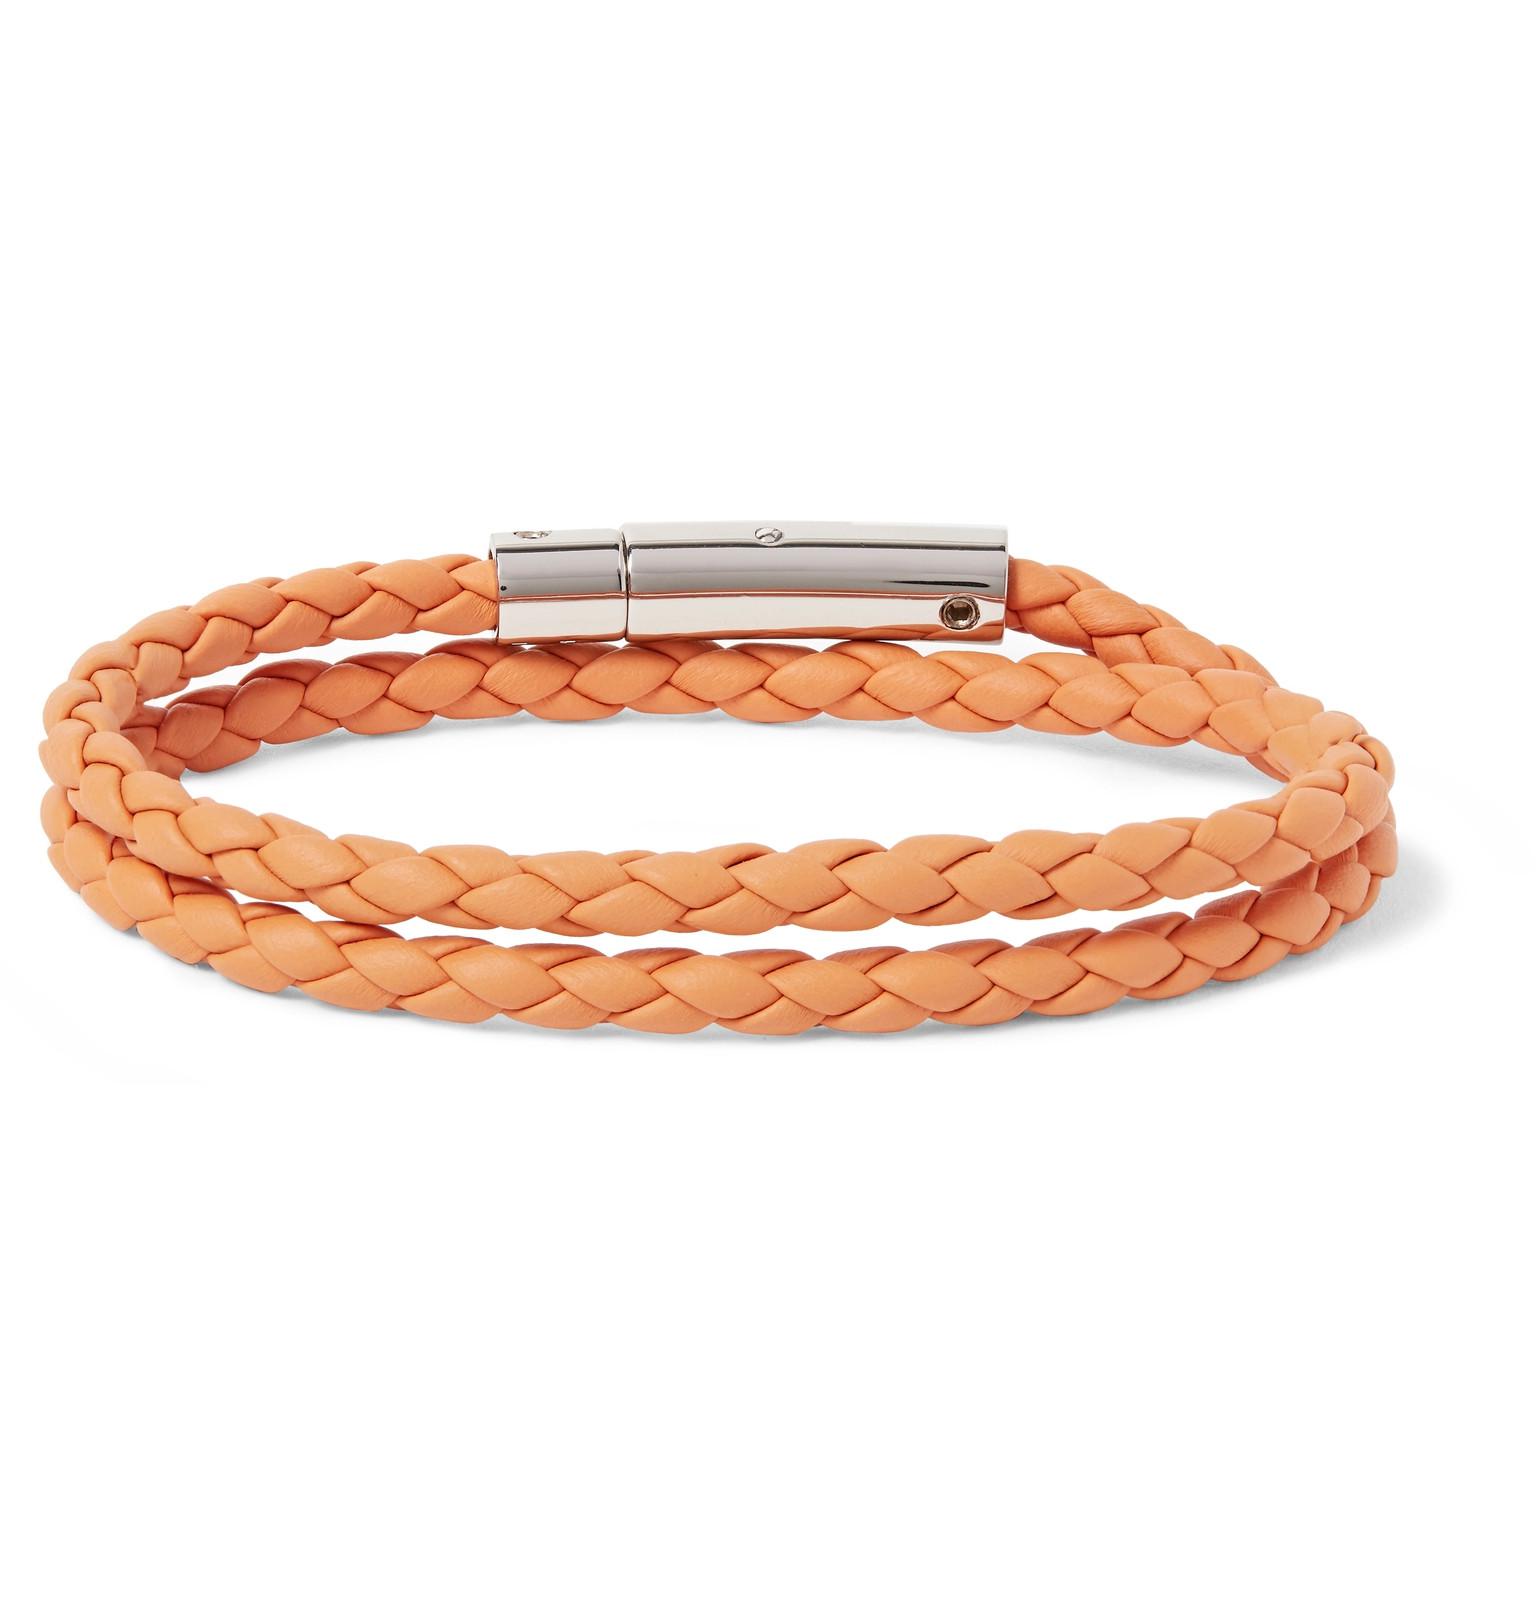 Tod's Leather Mycolors Bracelet in Orange for Men - Lyst